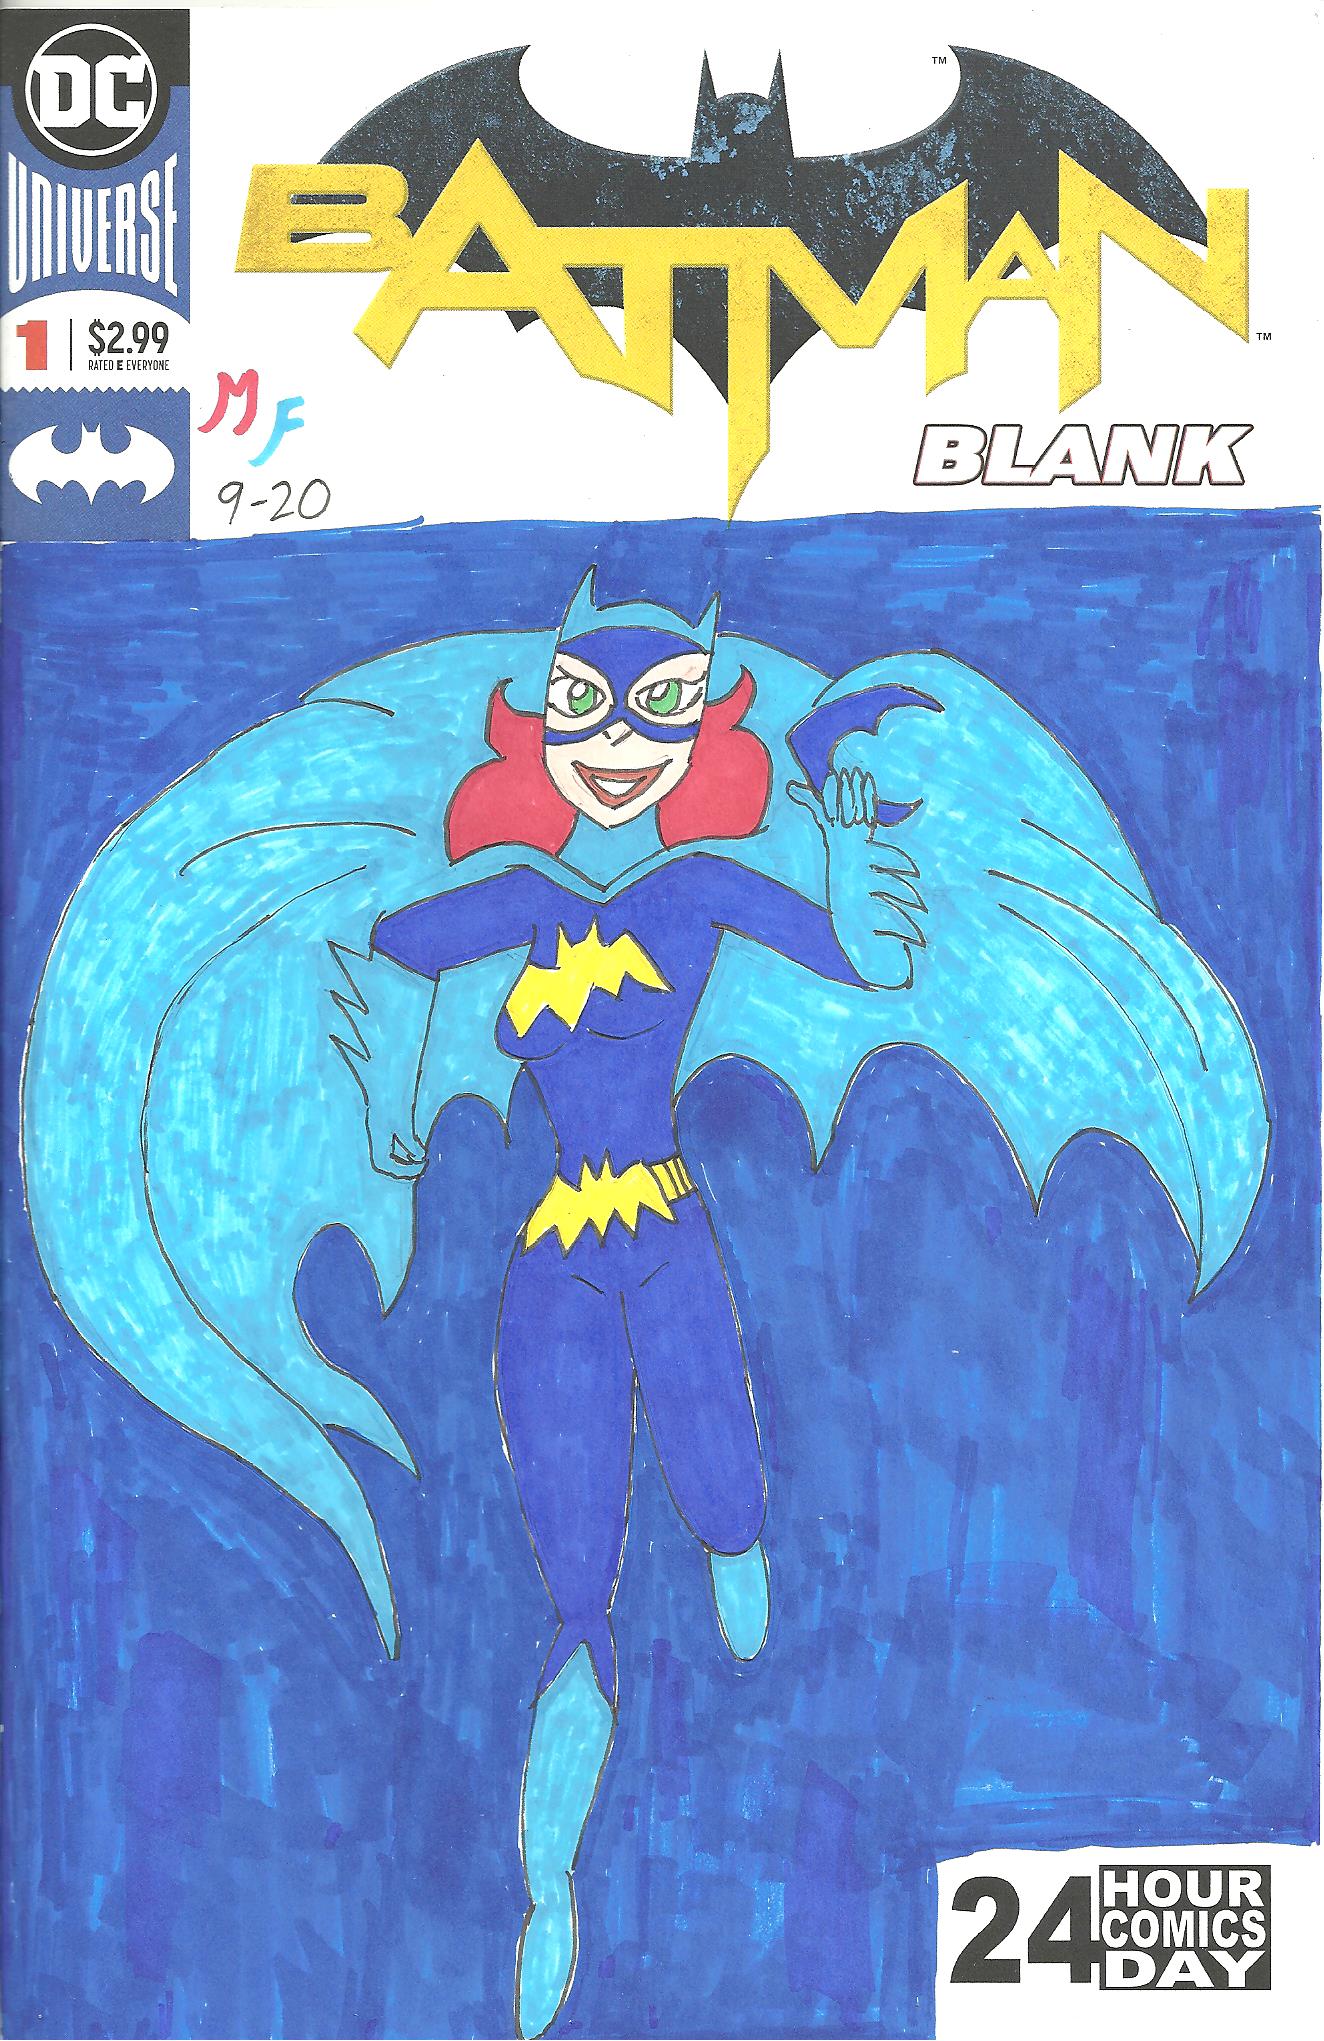 Batman #1 Batgirl comic cover